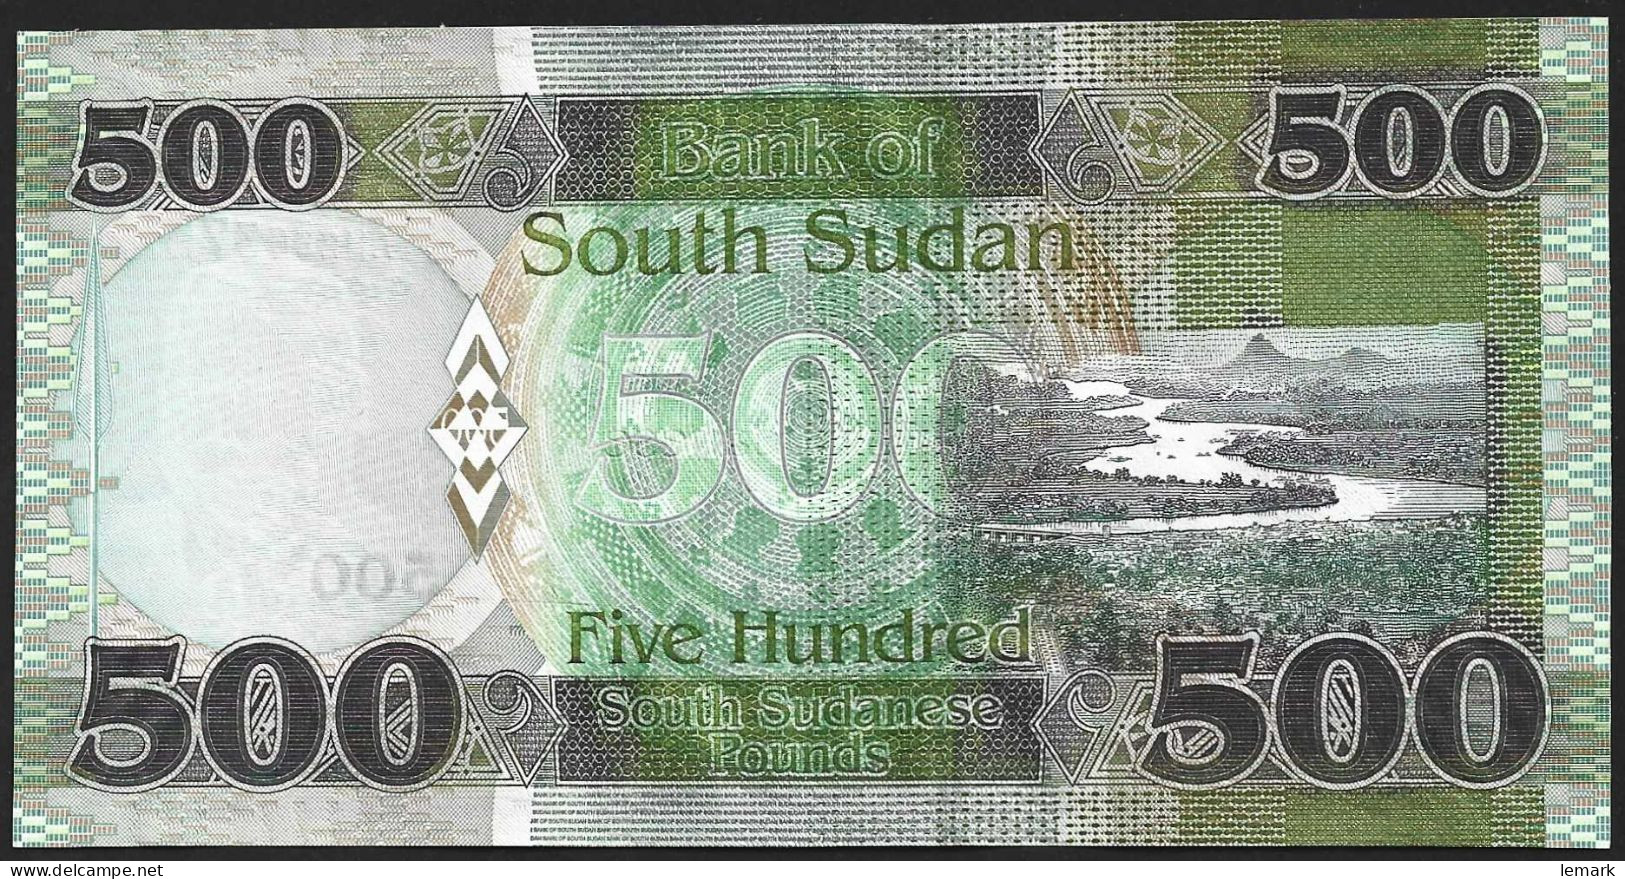 South Sudan 500 Pound 2020 P16b UNC - South Sudan